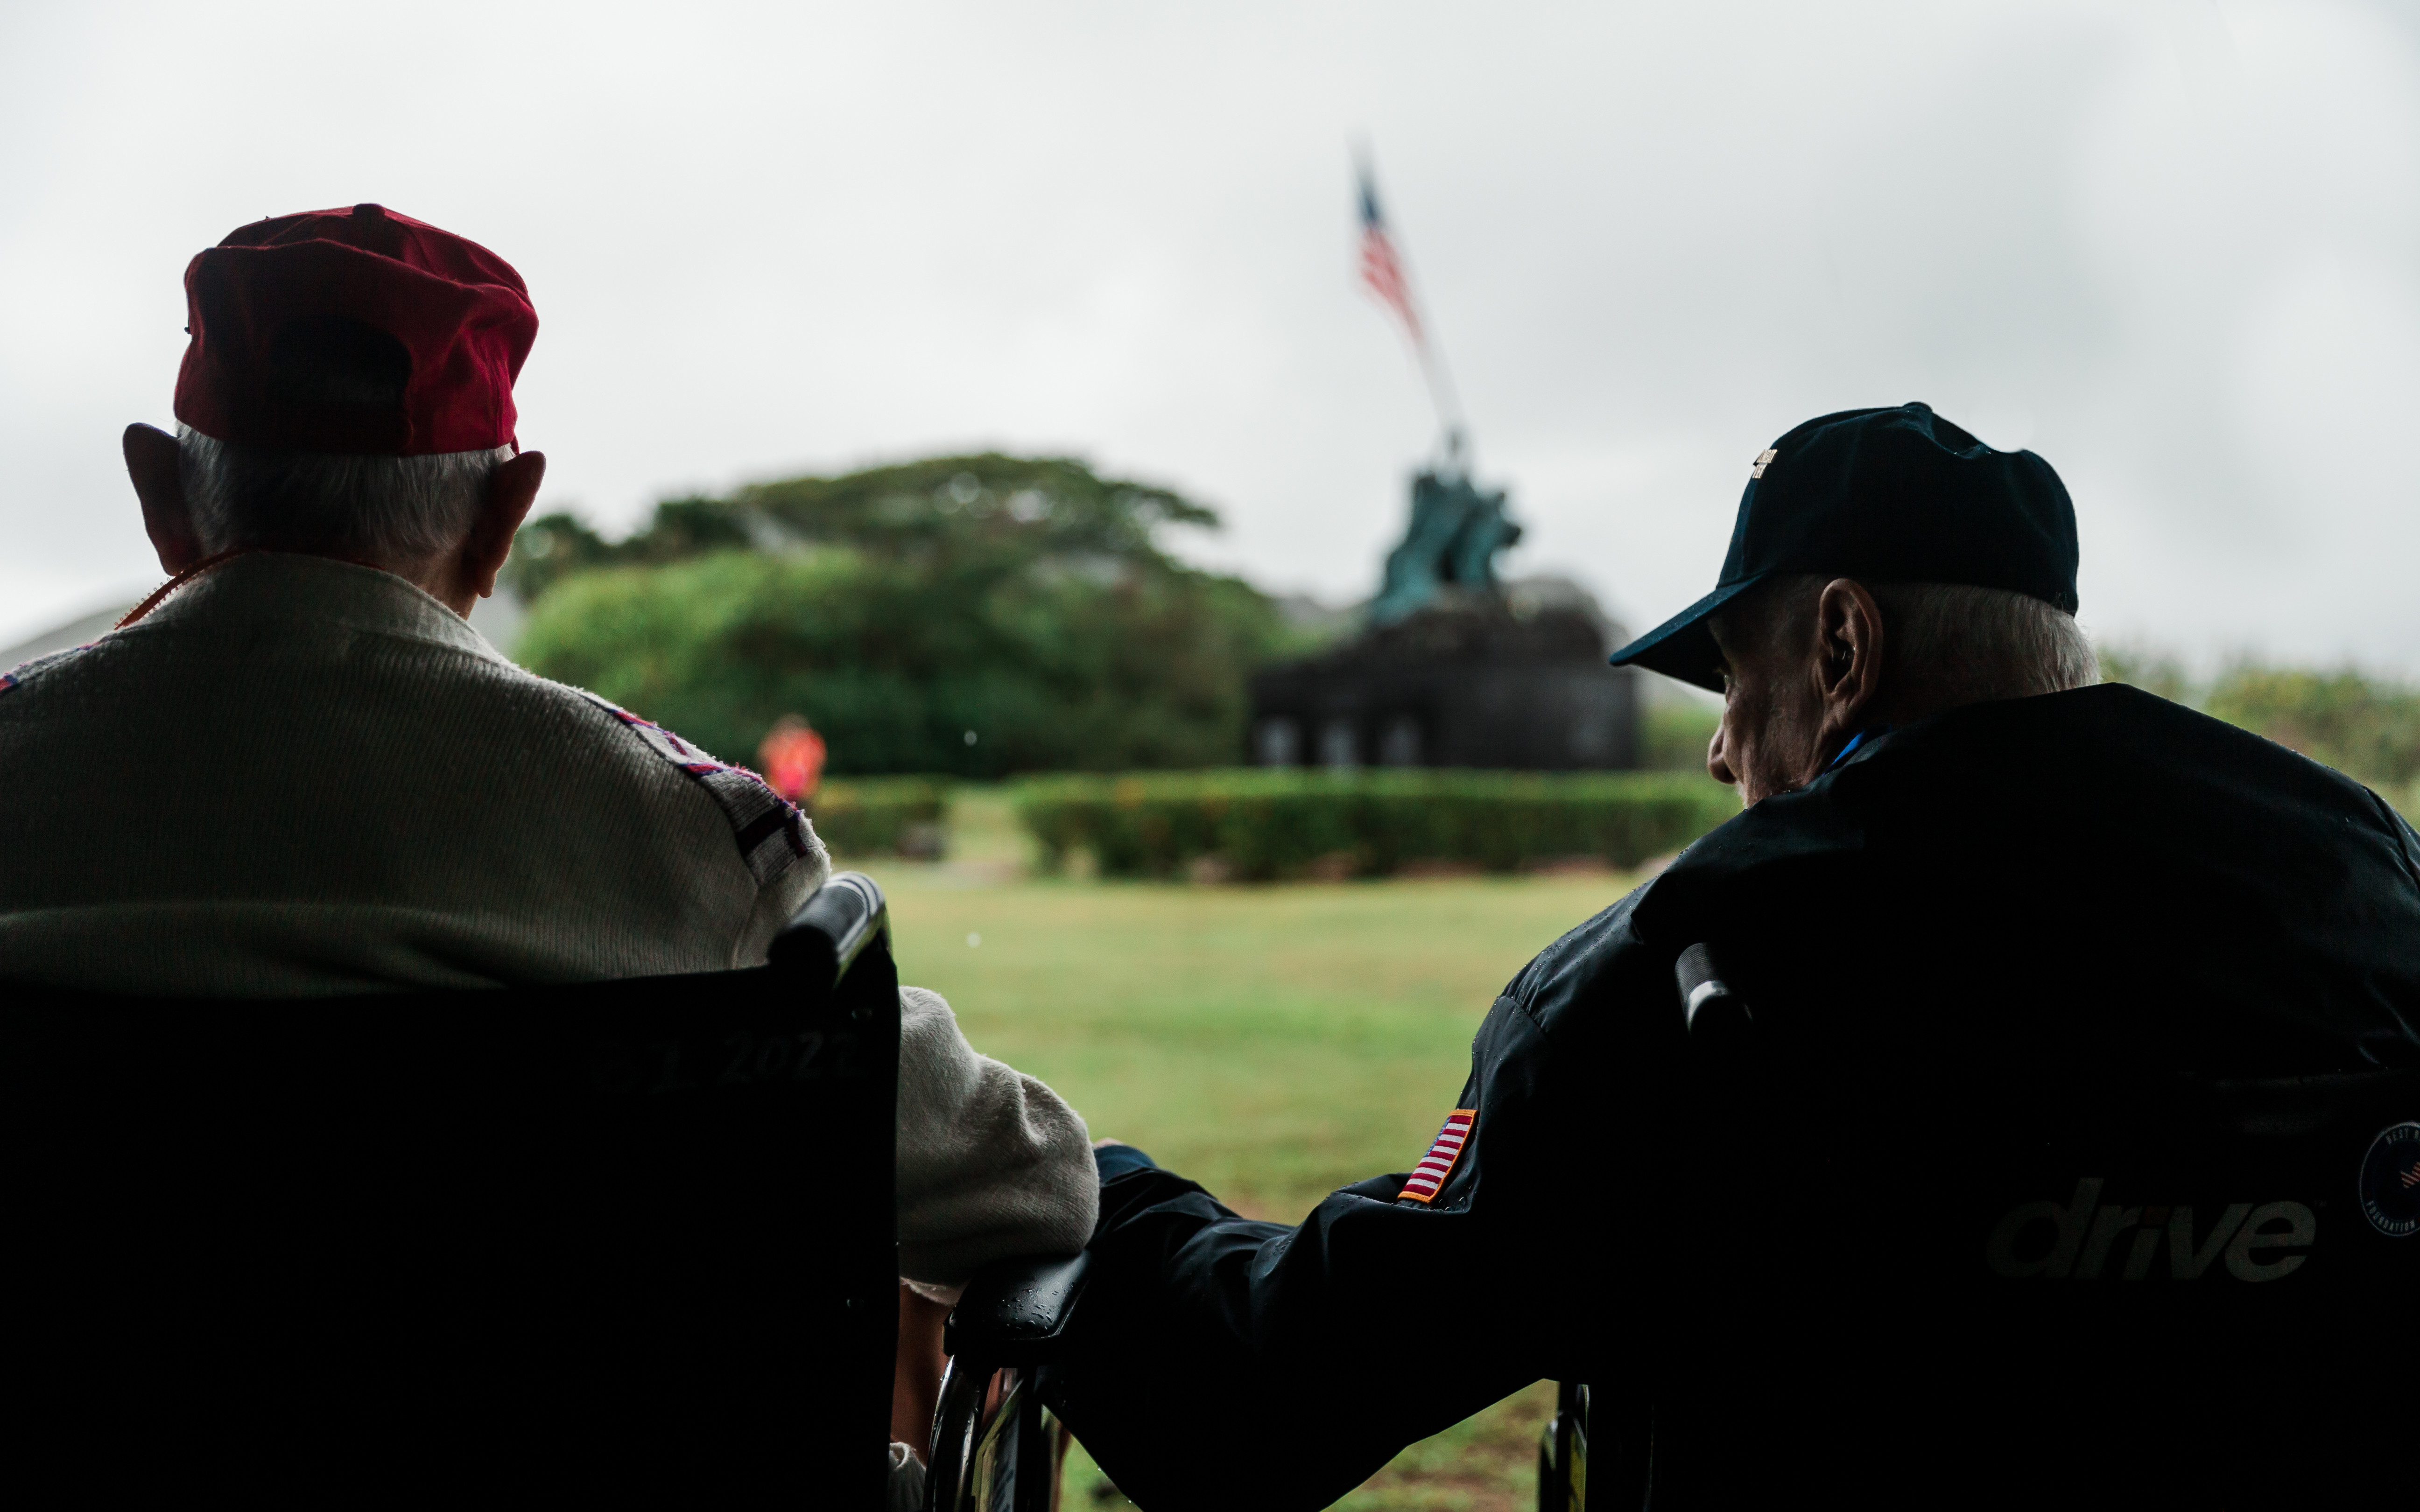 Us Marine Corps War Memorial Veterans Day Hawaiian Shirt - T